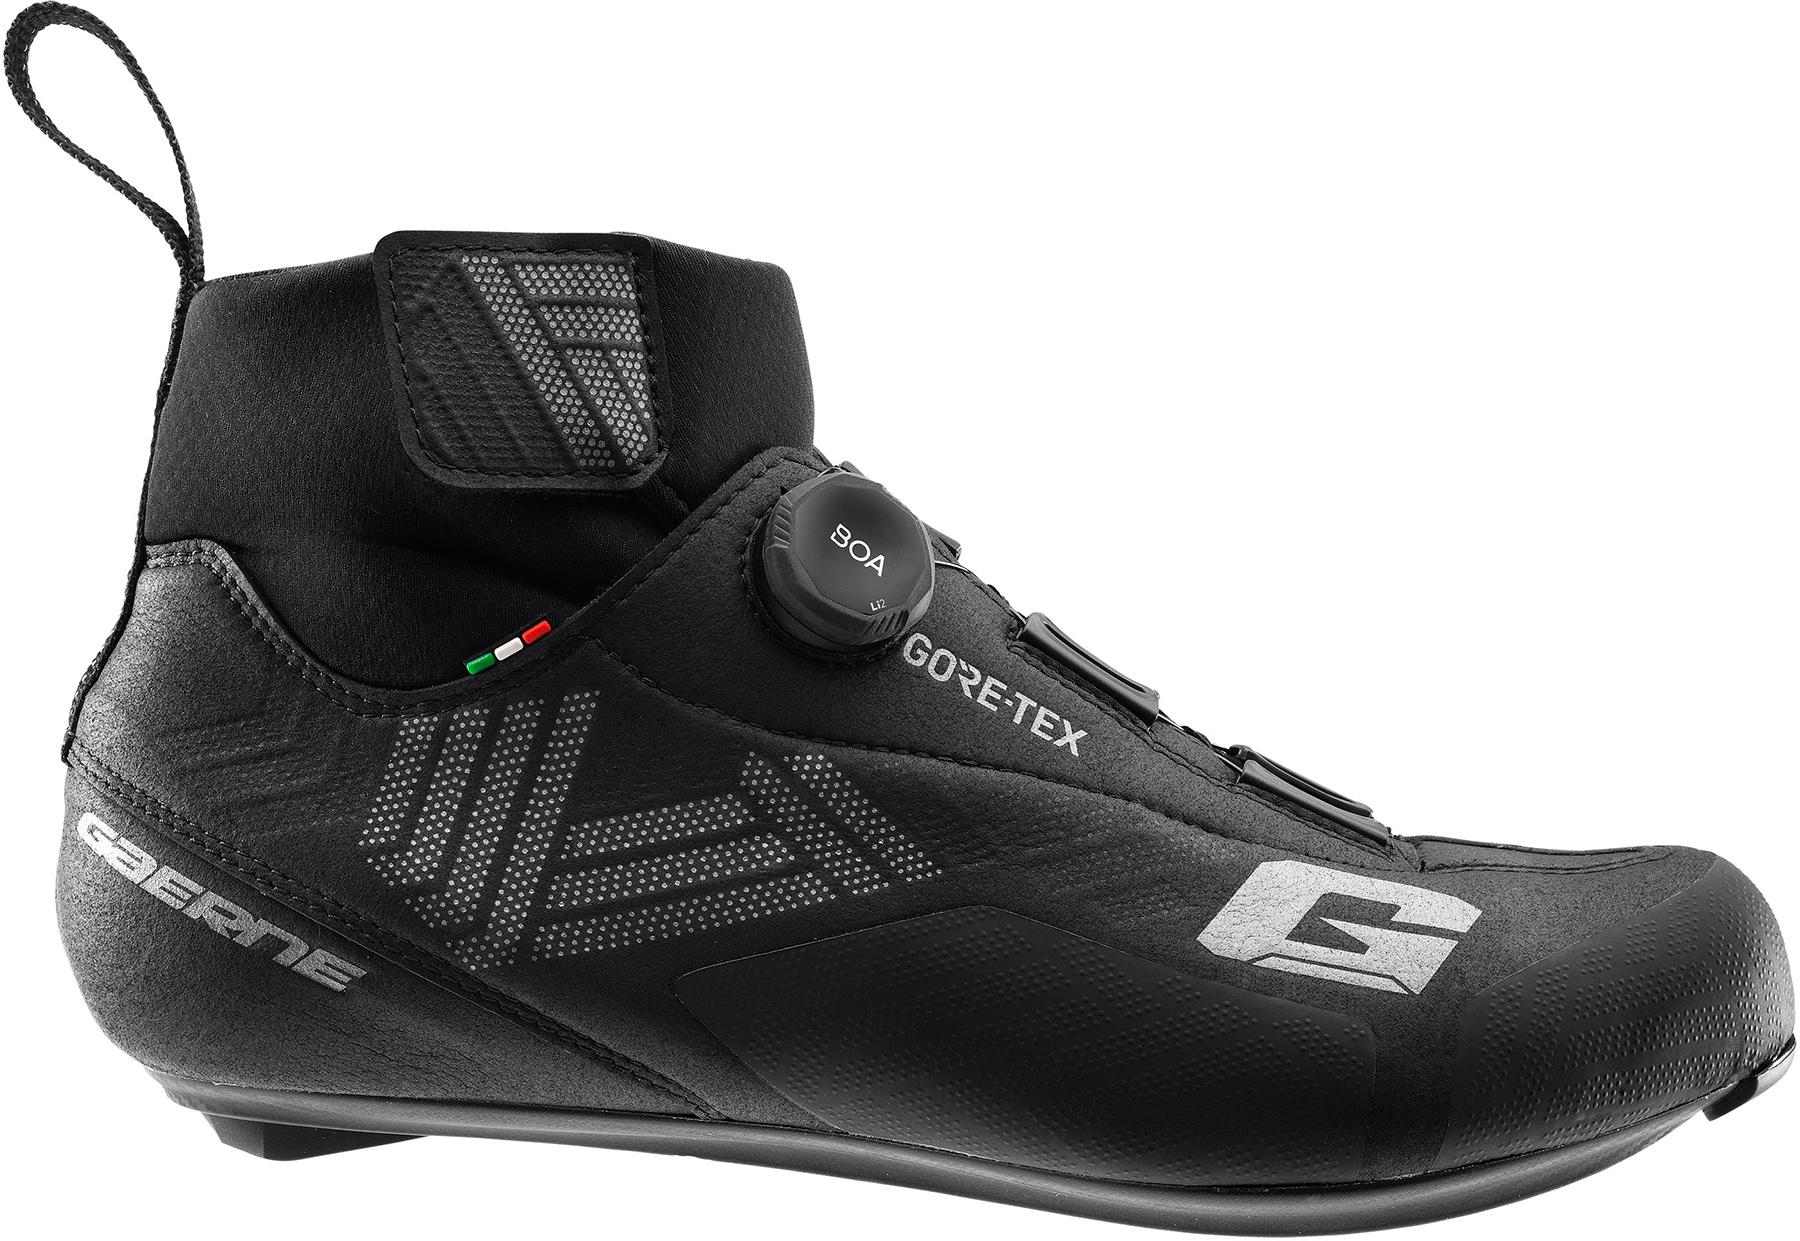 Gaerne Icestorm Road Goretex Boots 1.0  Black